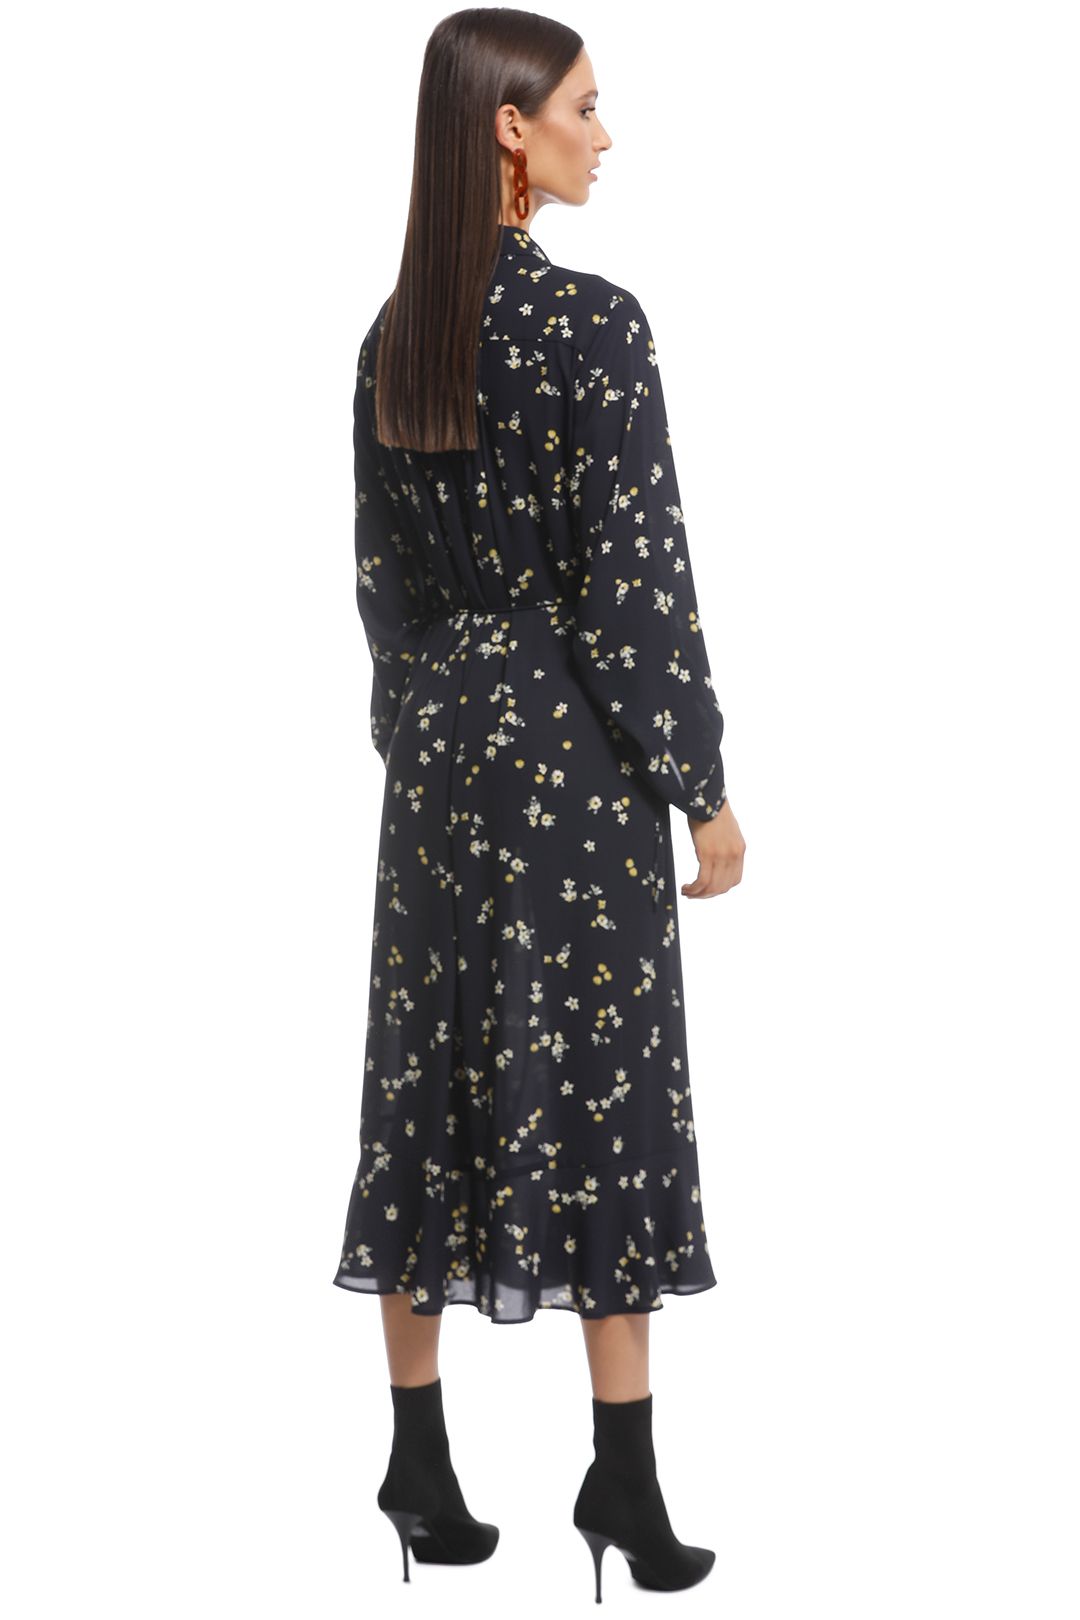 Veronika Maine - Dainty Floral Shirt Dress - Black Floral - Back